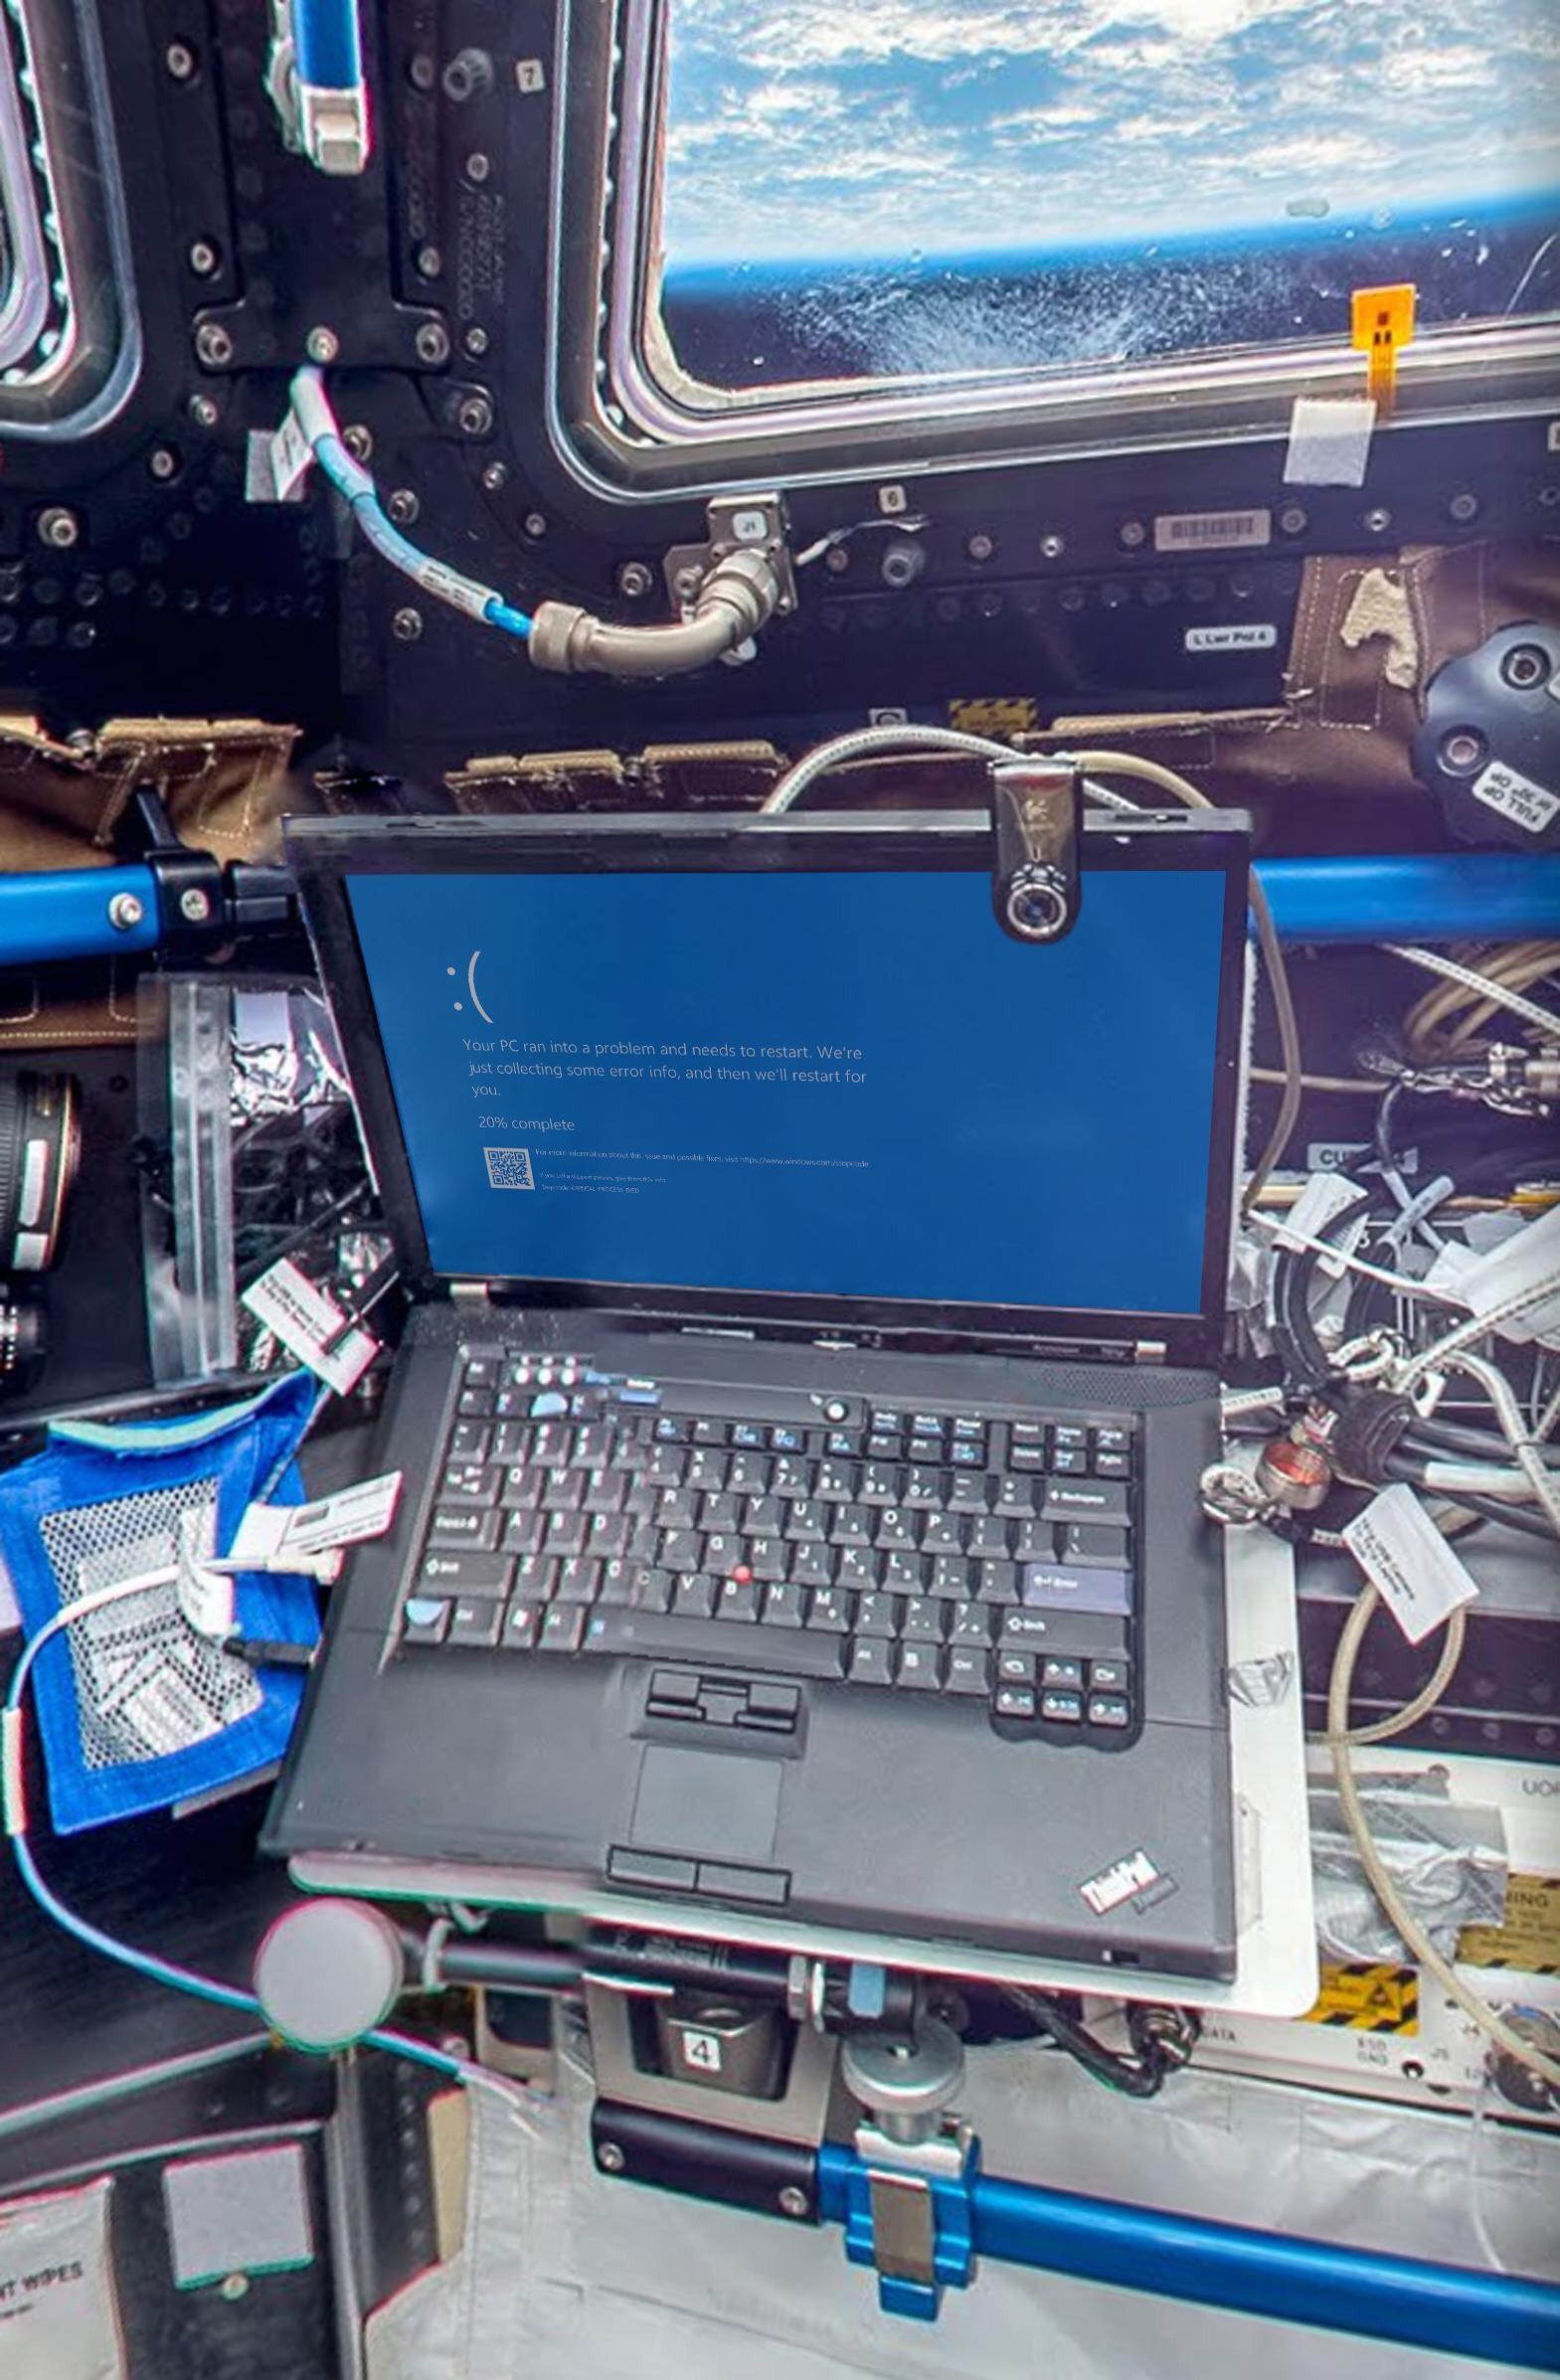 Microsoft Windows crashing on the ISS.